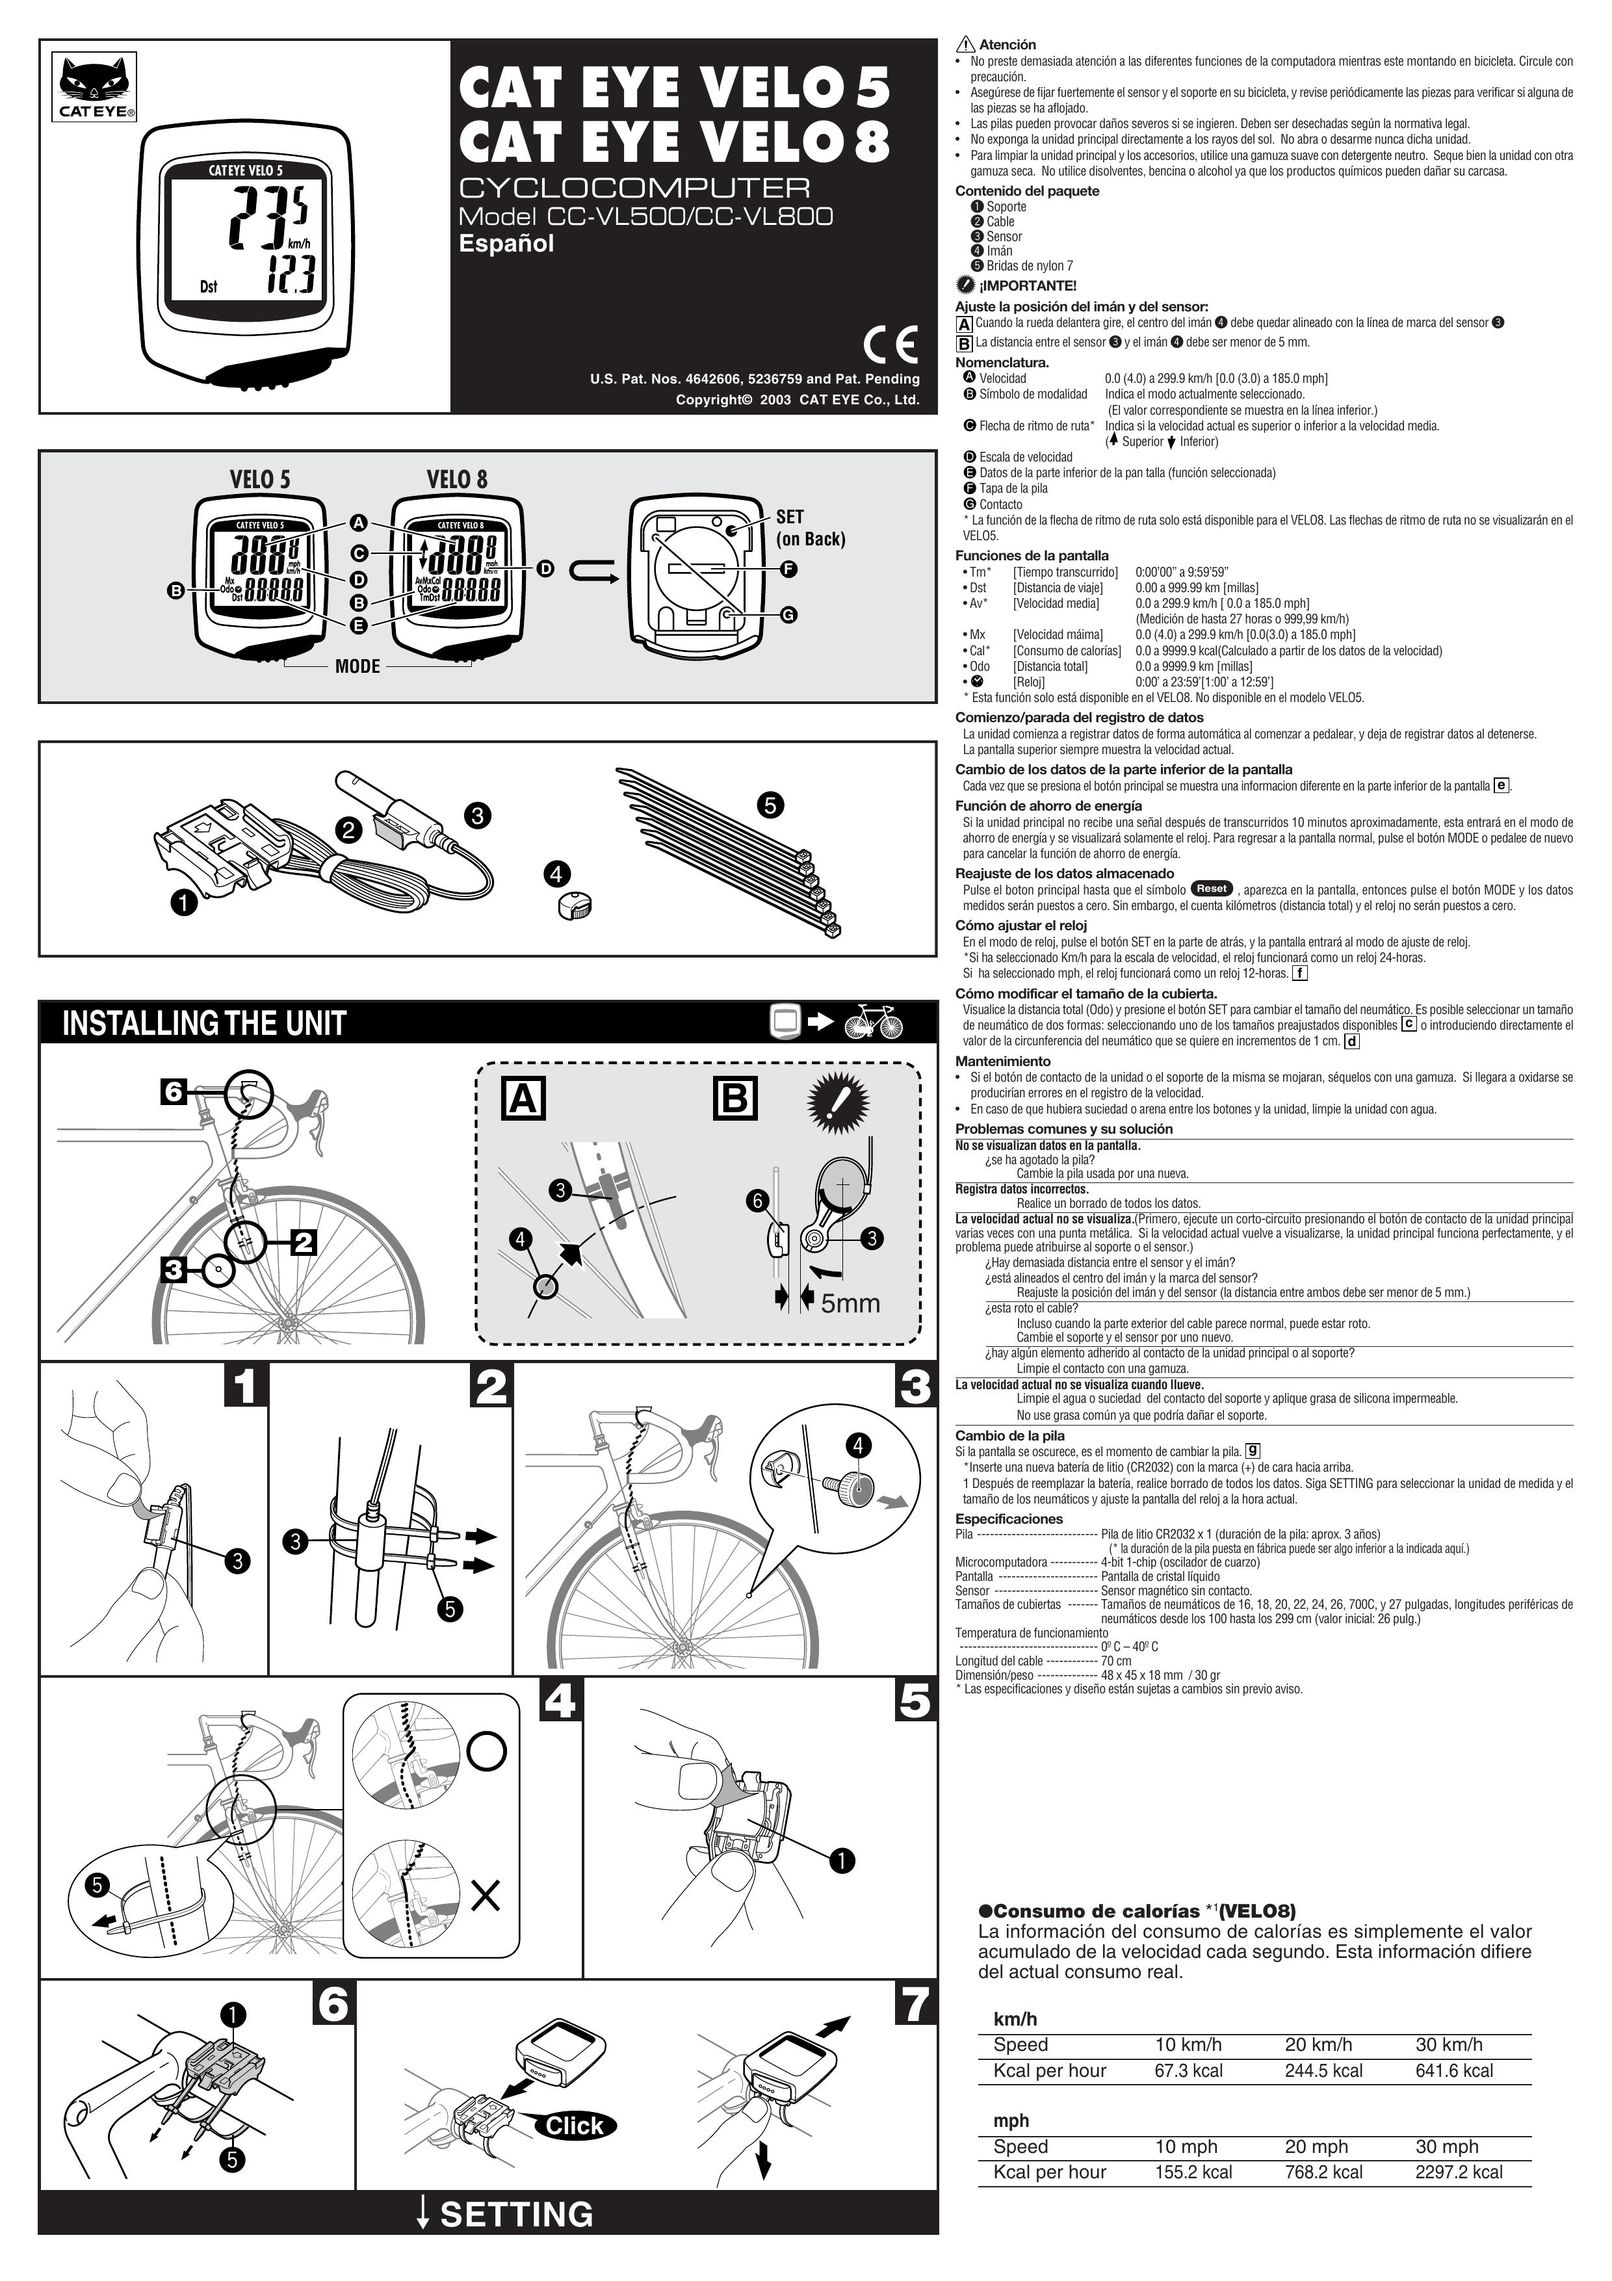 Cateye VELVO 5 Cyclometer User Manual